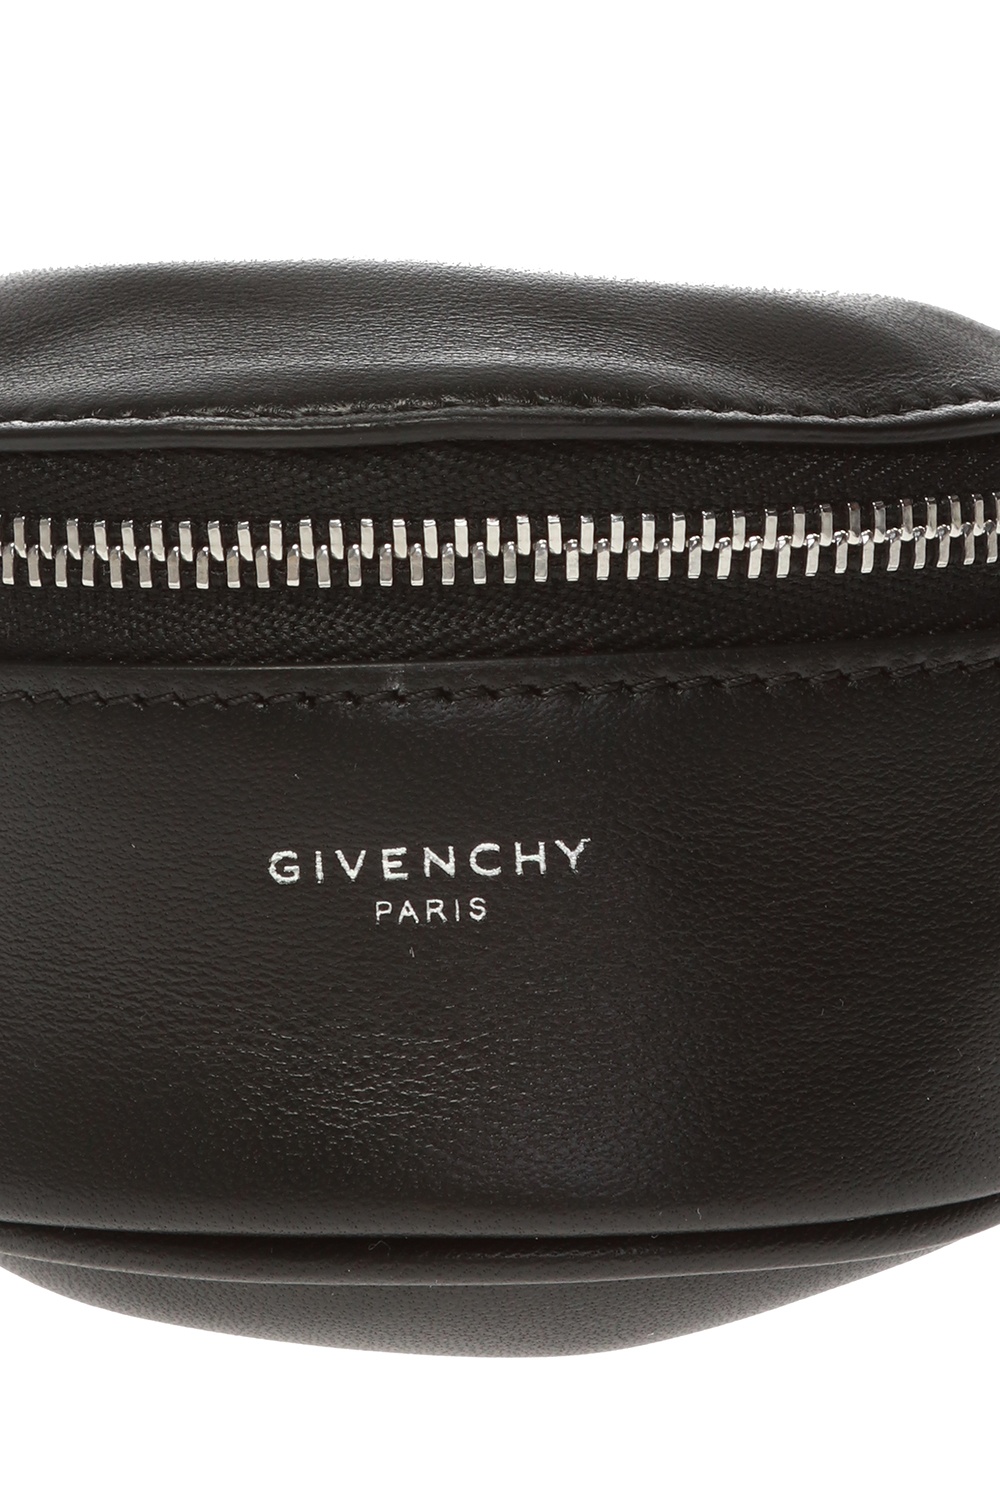 Black Wrist bag Givenchy - Vitkac France